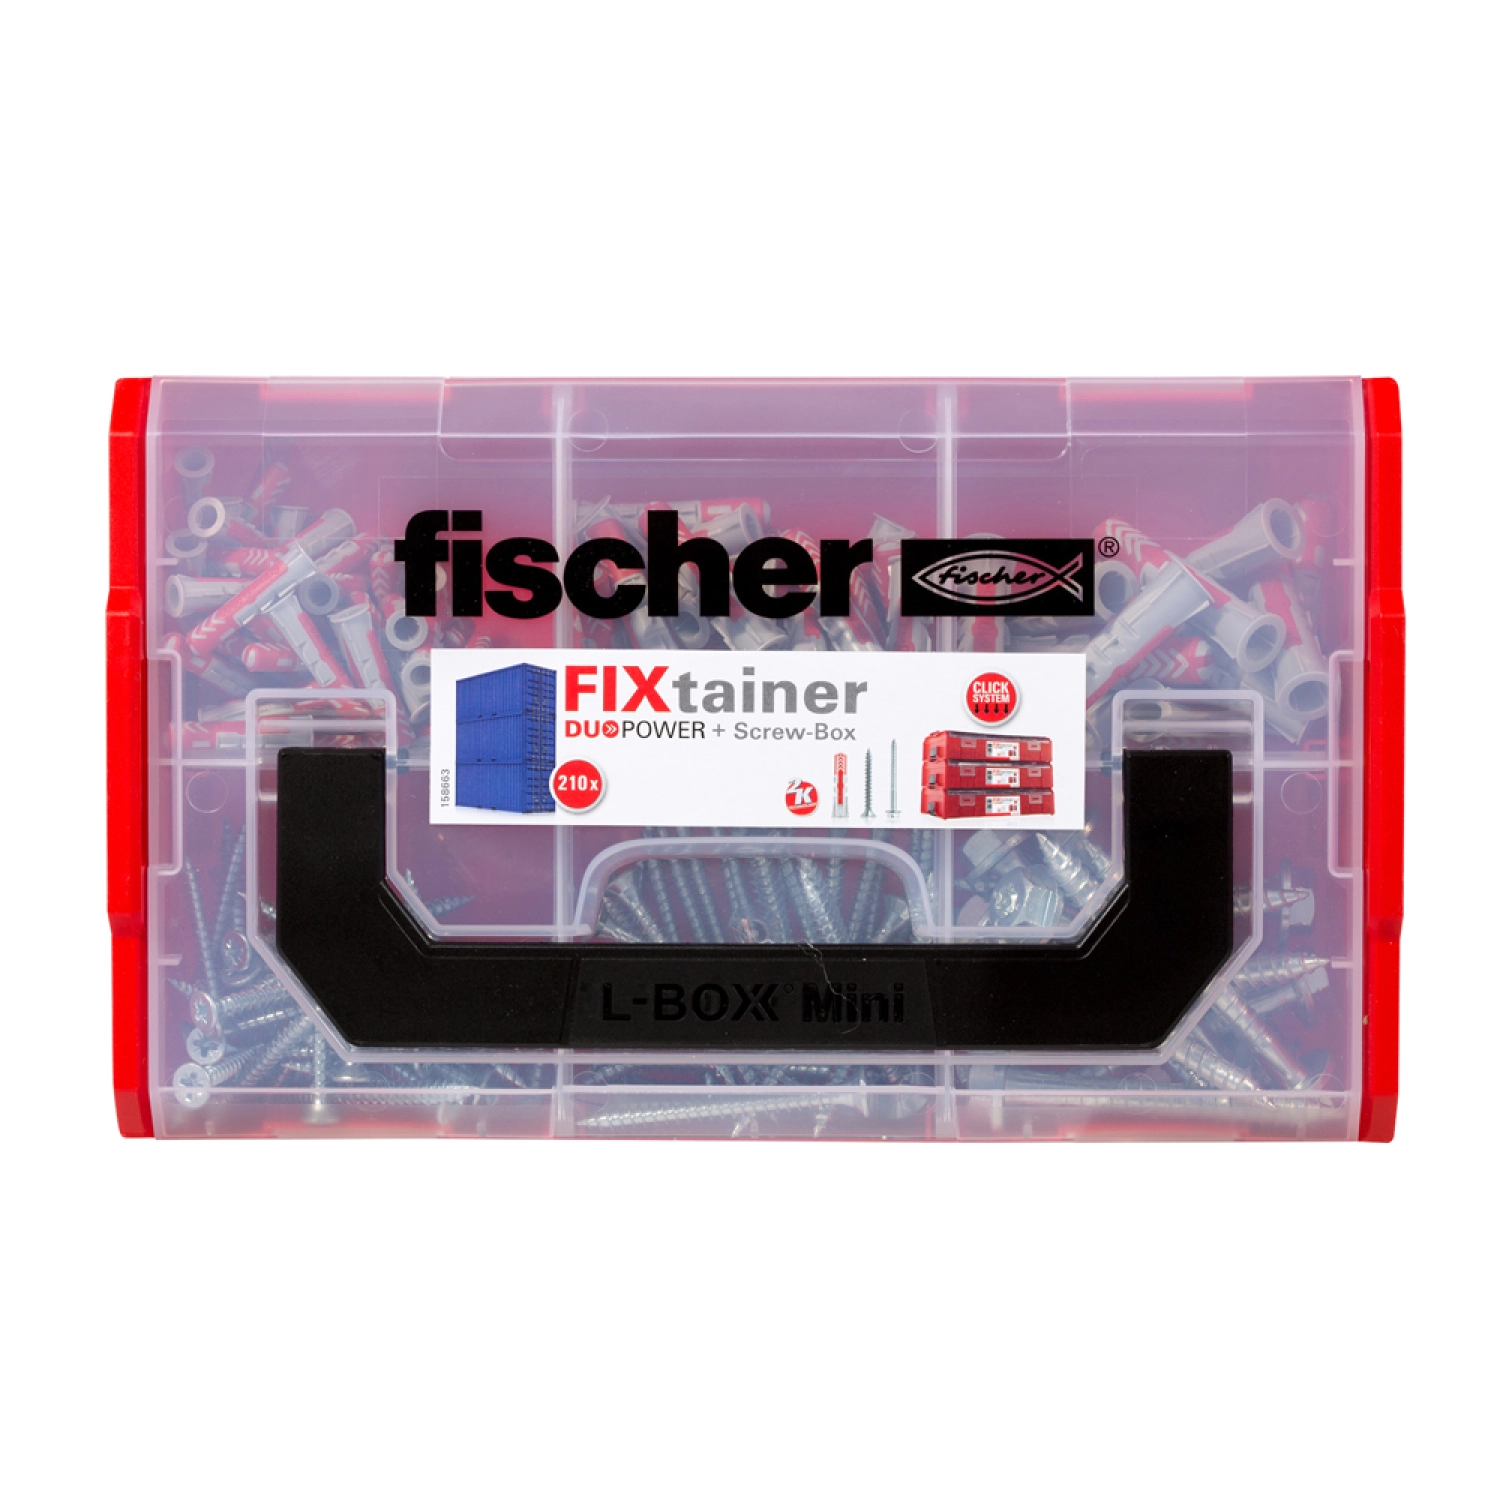 fischer 536162 - fischer FixTainer - Chevilles tous matériaux fischer DuoPower avec vis (105pcs) FixTainer DuoPower avec vis-image